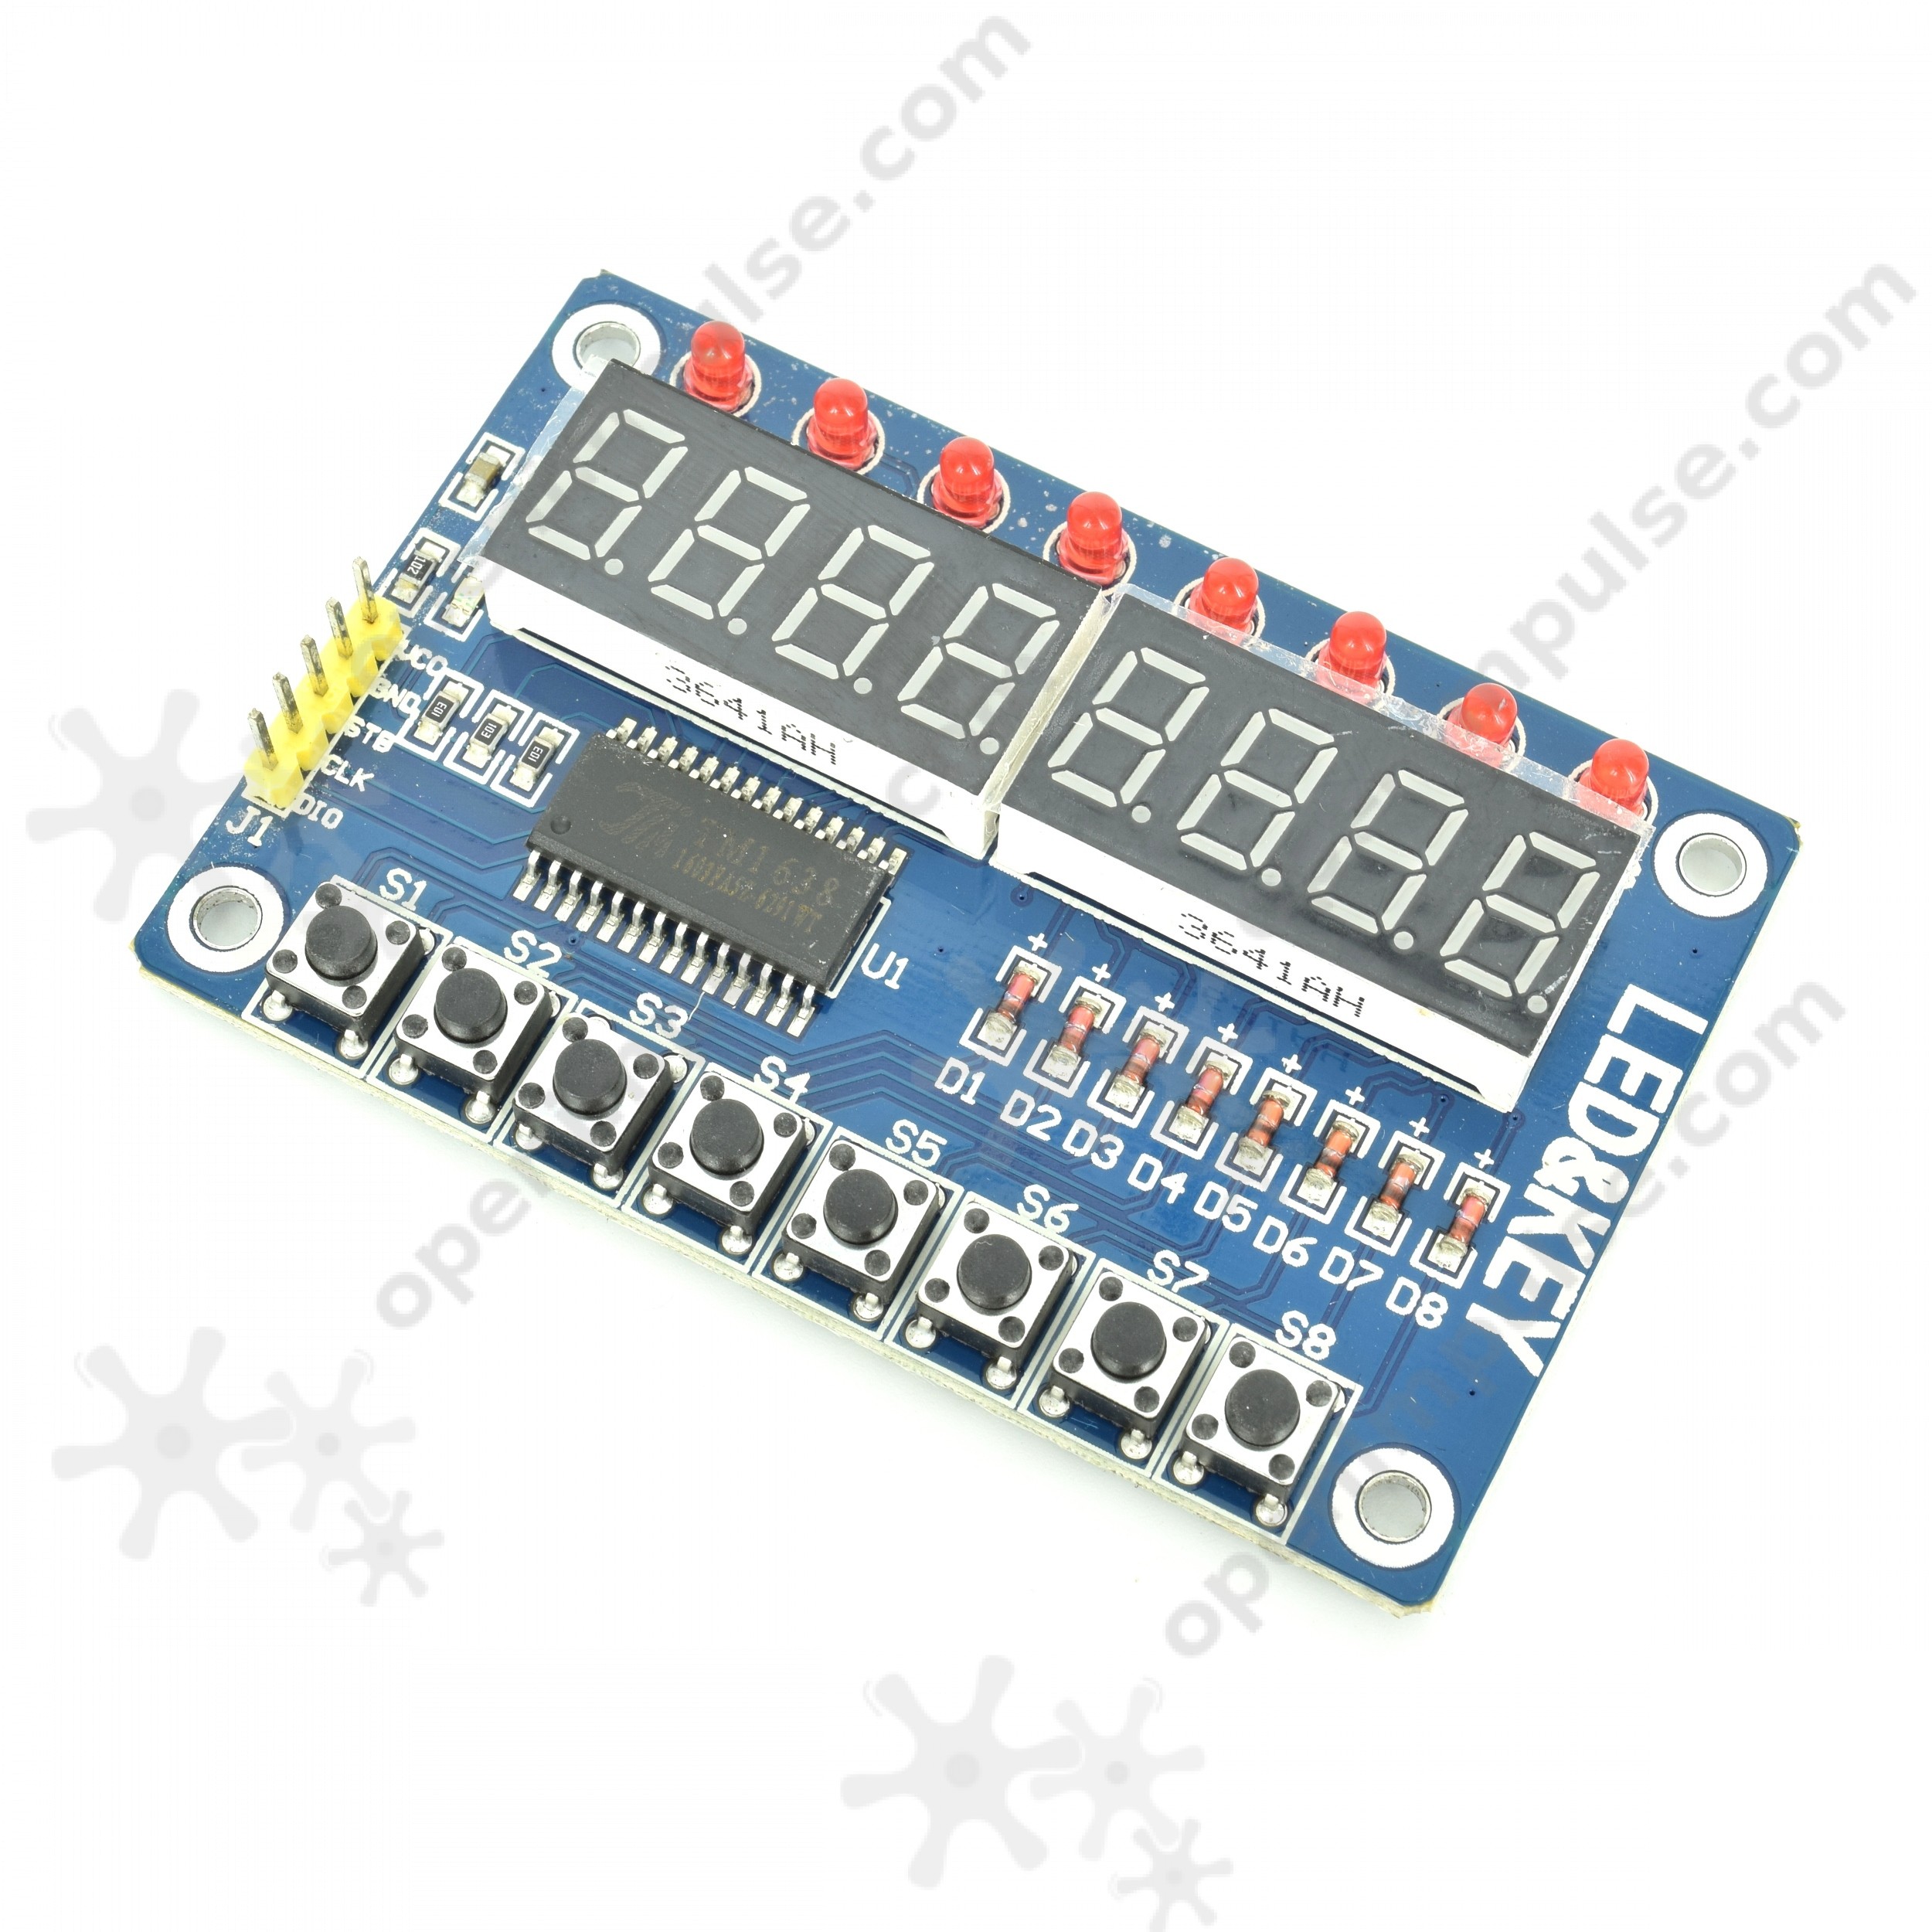 1-10pcs TM1638 LED Key 8 x 7-segment Display Button LED Display Module Arduino